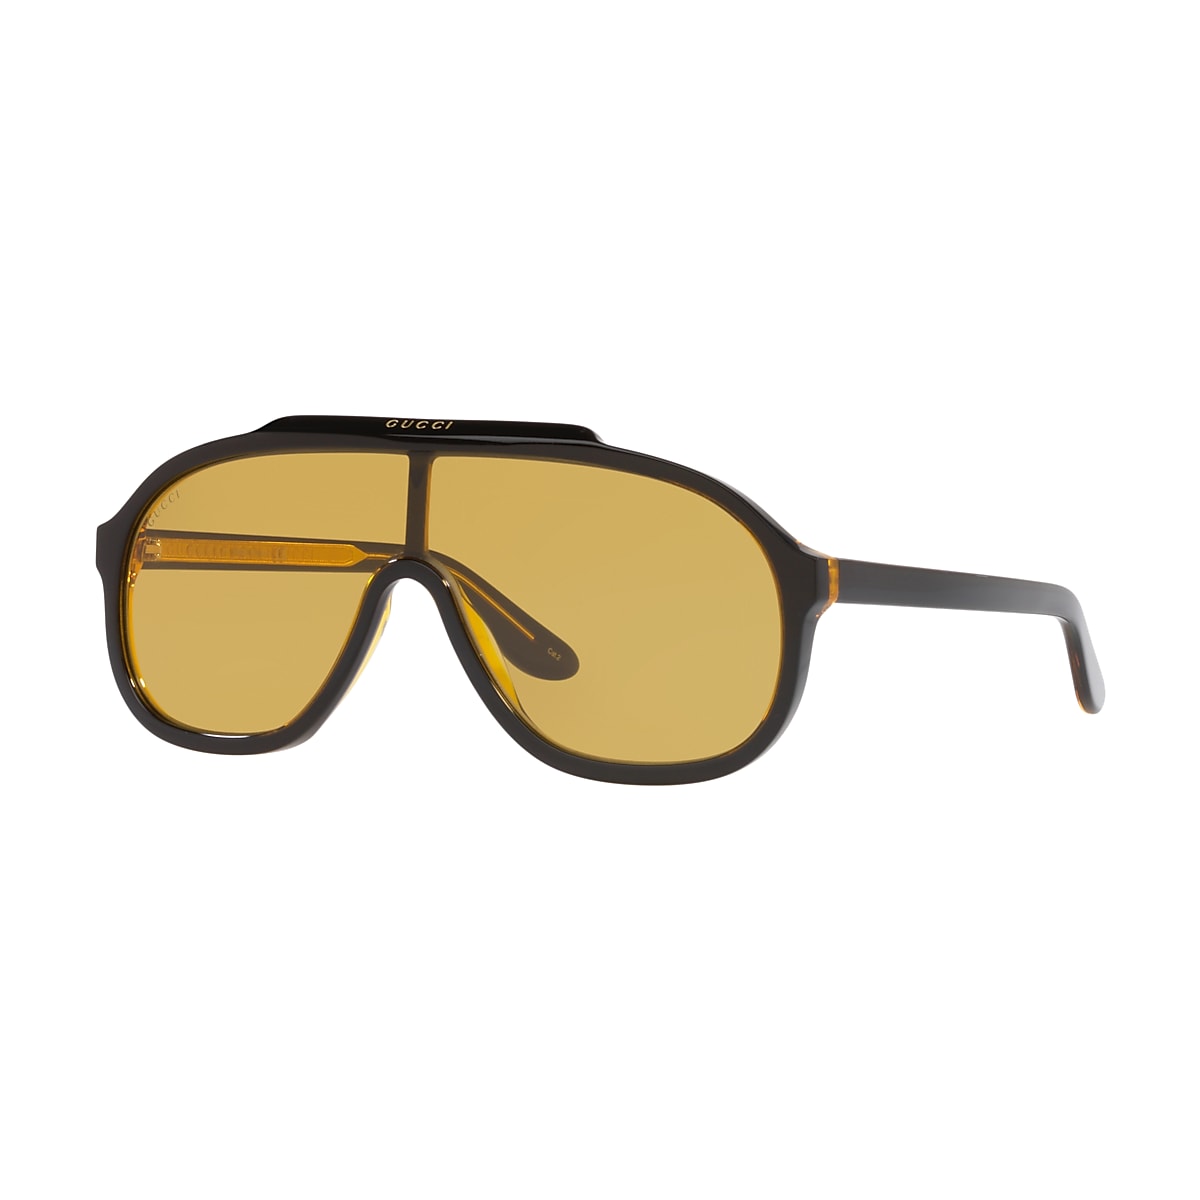 Top 73+ imagen gucci yellow sunglasses